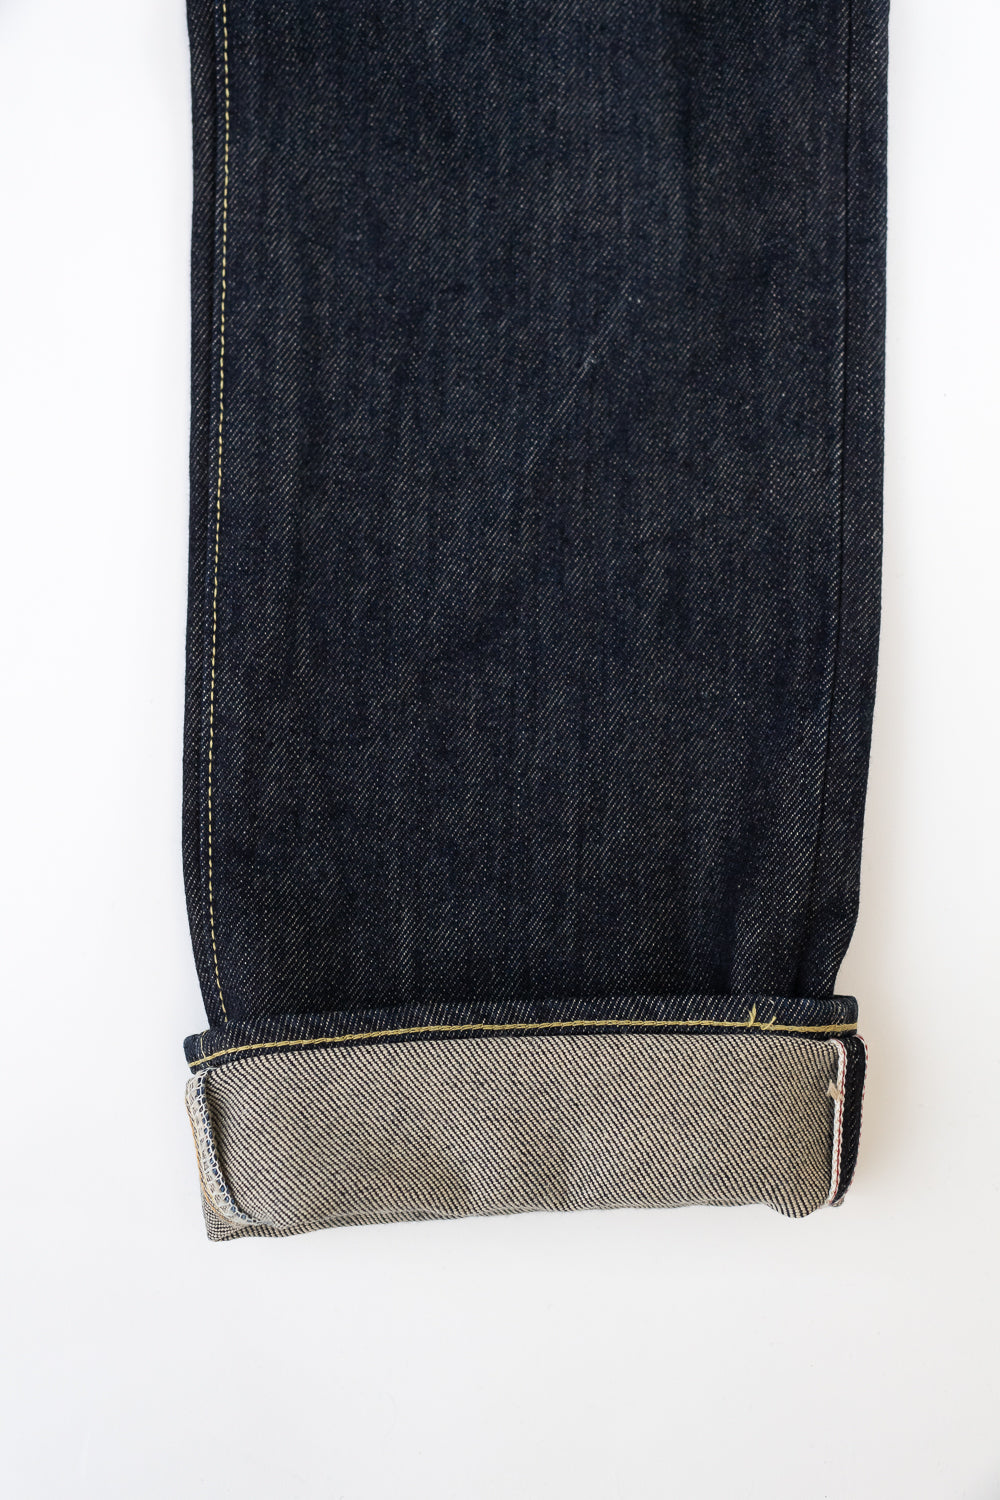 IH-634S-21 - 21oz Selvedge Denim Straight Cut Jeans - Indigo